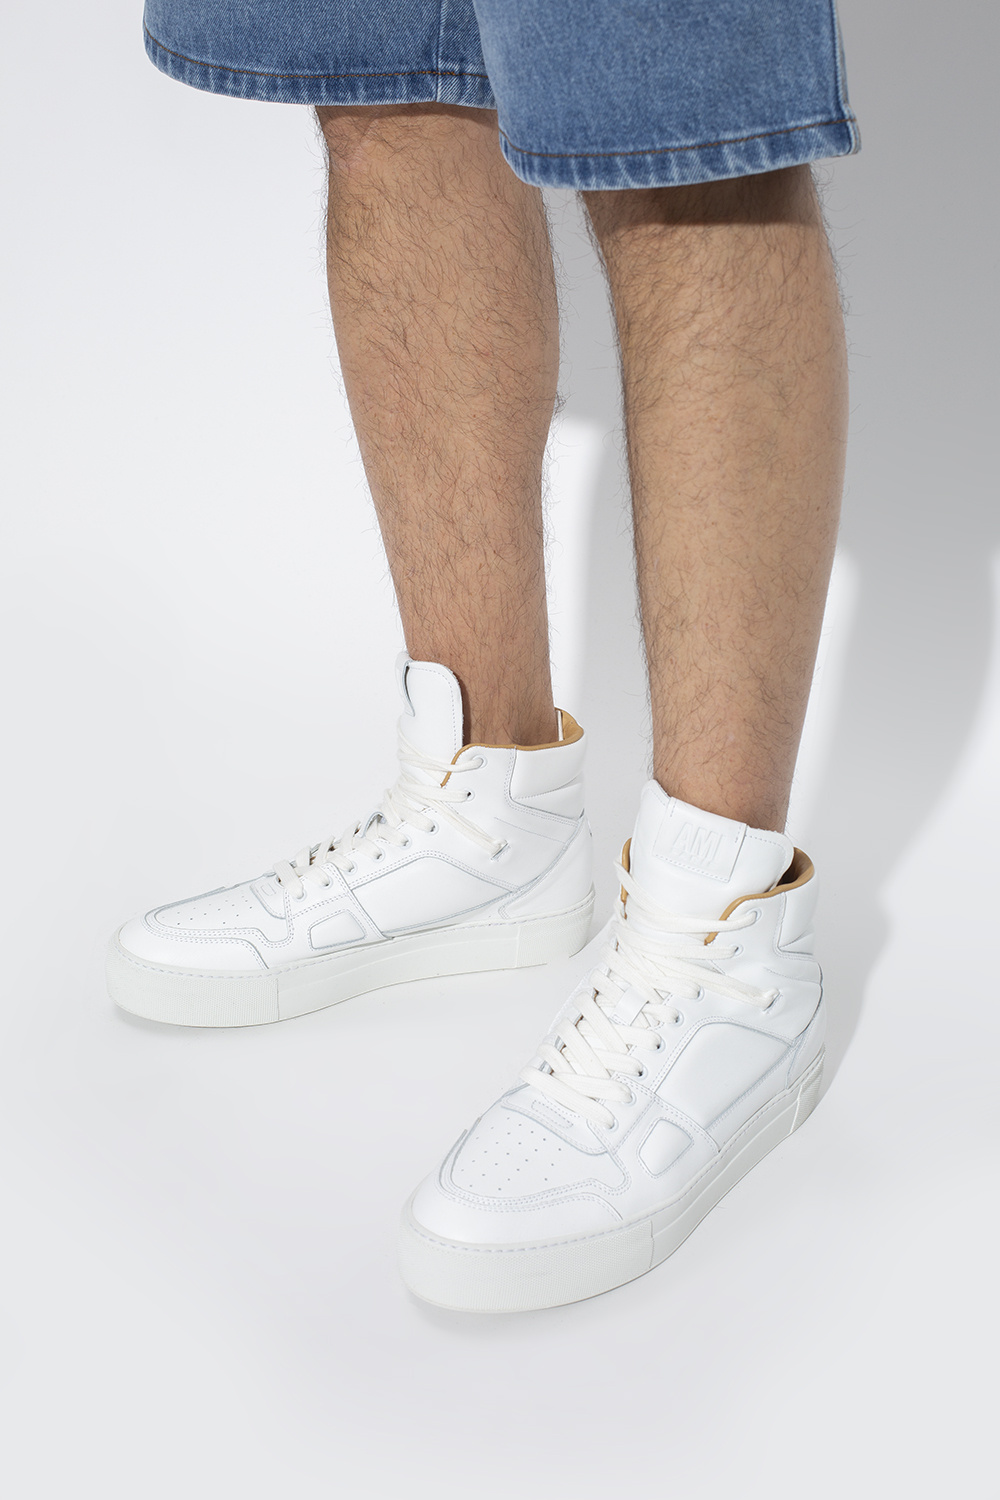 Ami Alexandre Mattiussi Leather sneakers | Men's Shoes | Vitkac